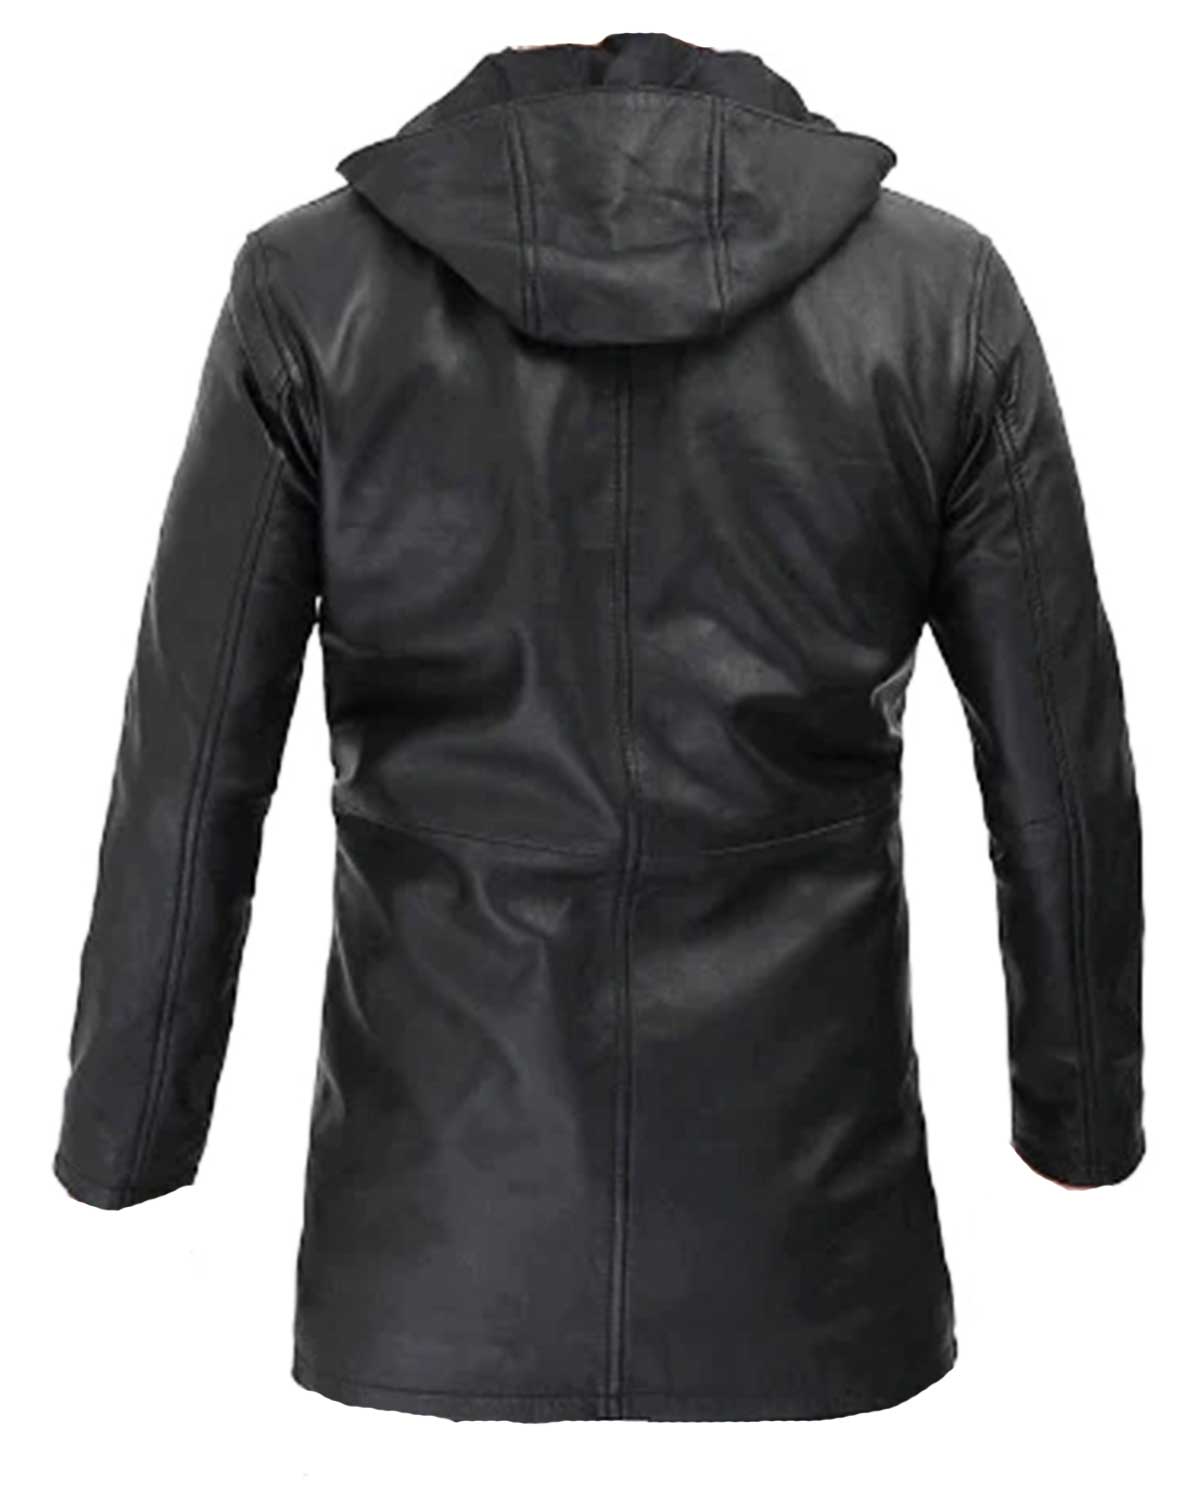 Elite Devine Men's Black Leather Jacket with Hood